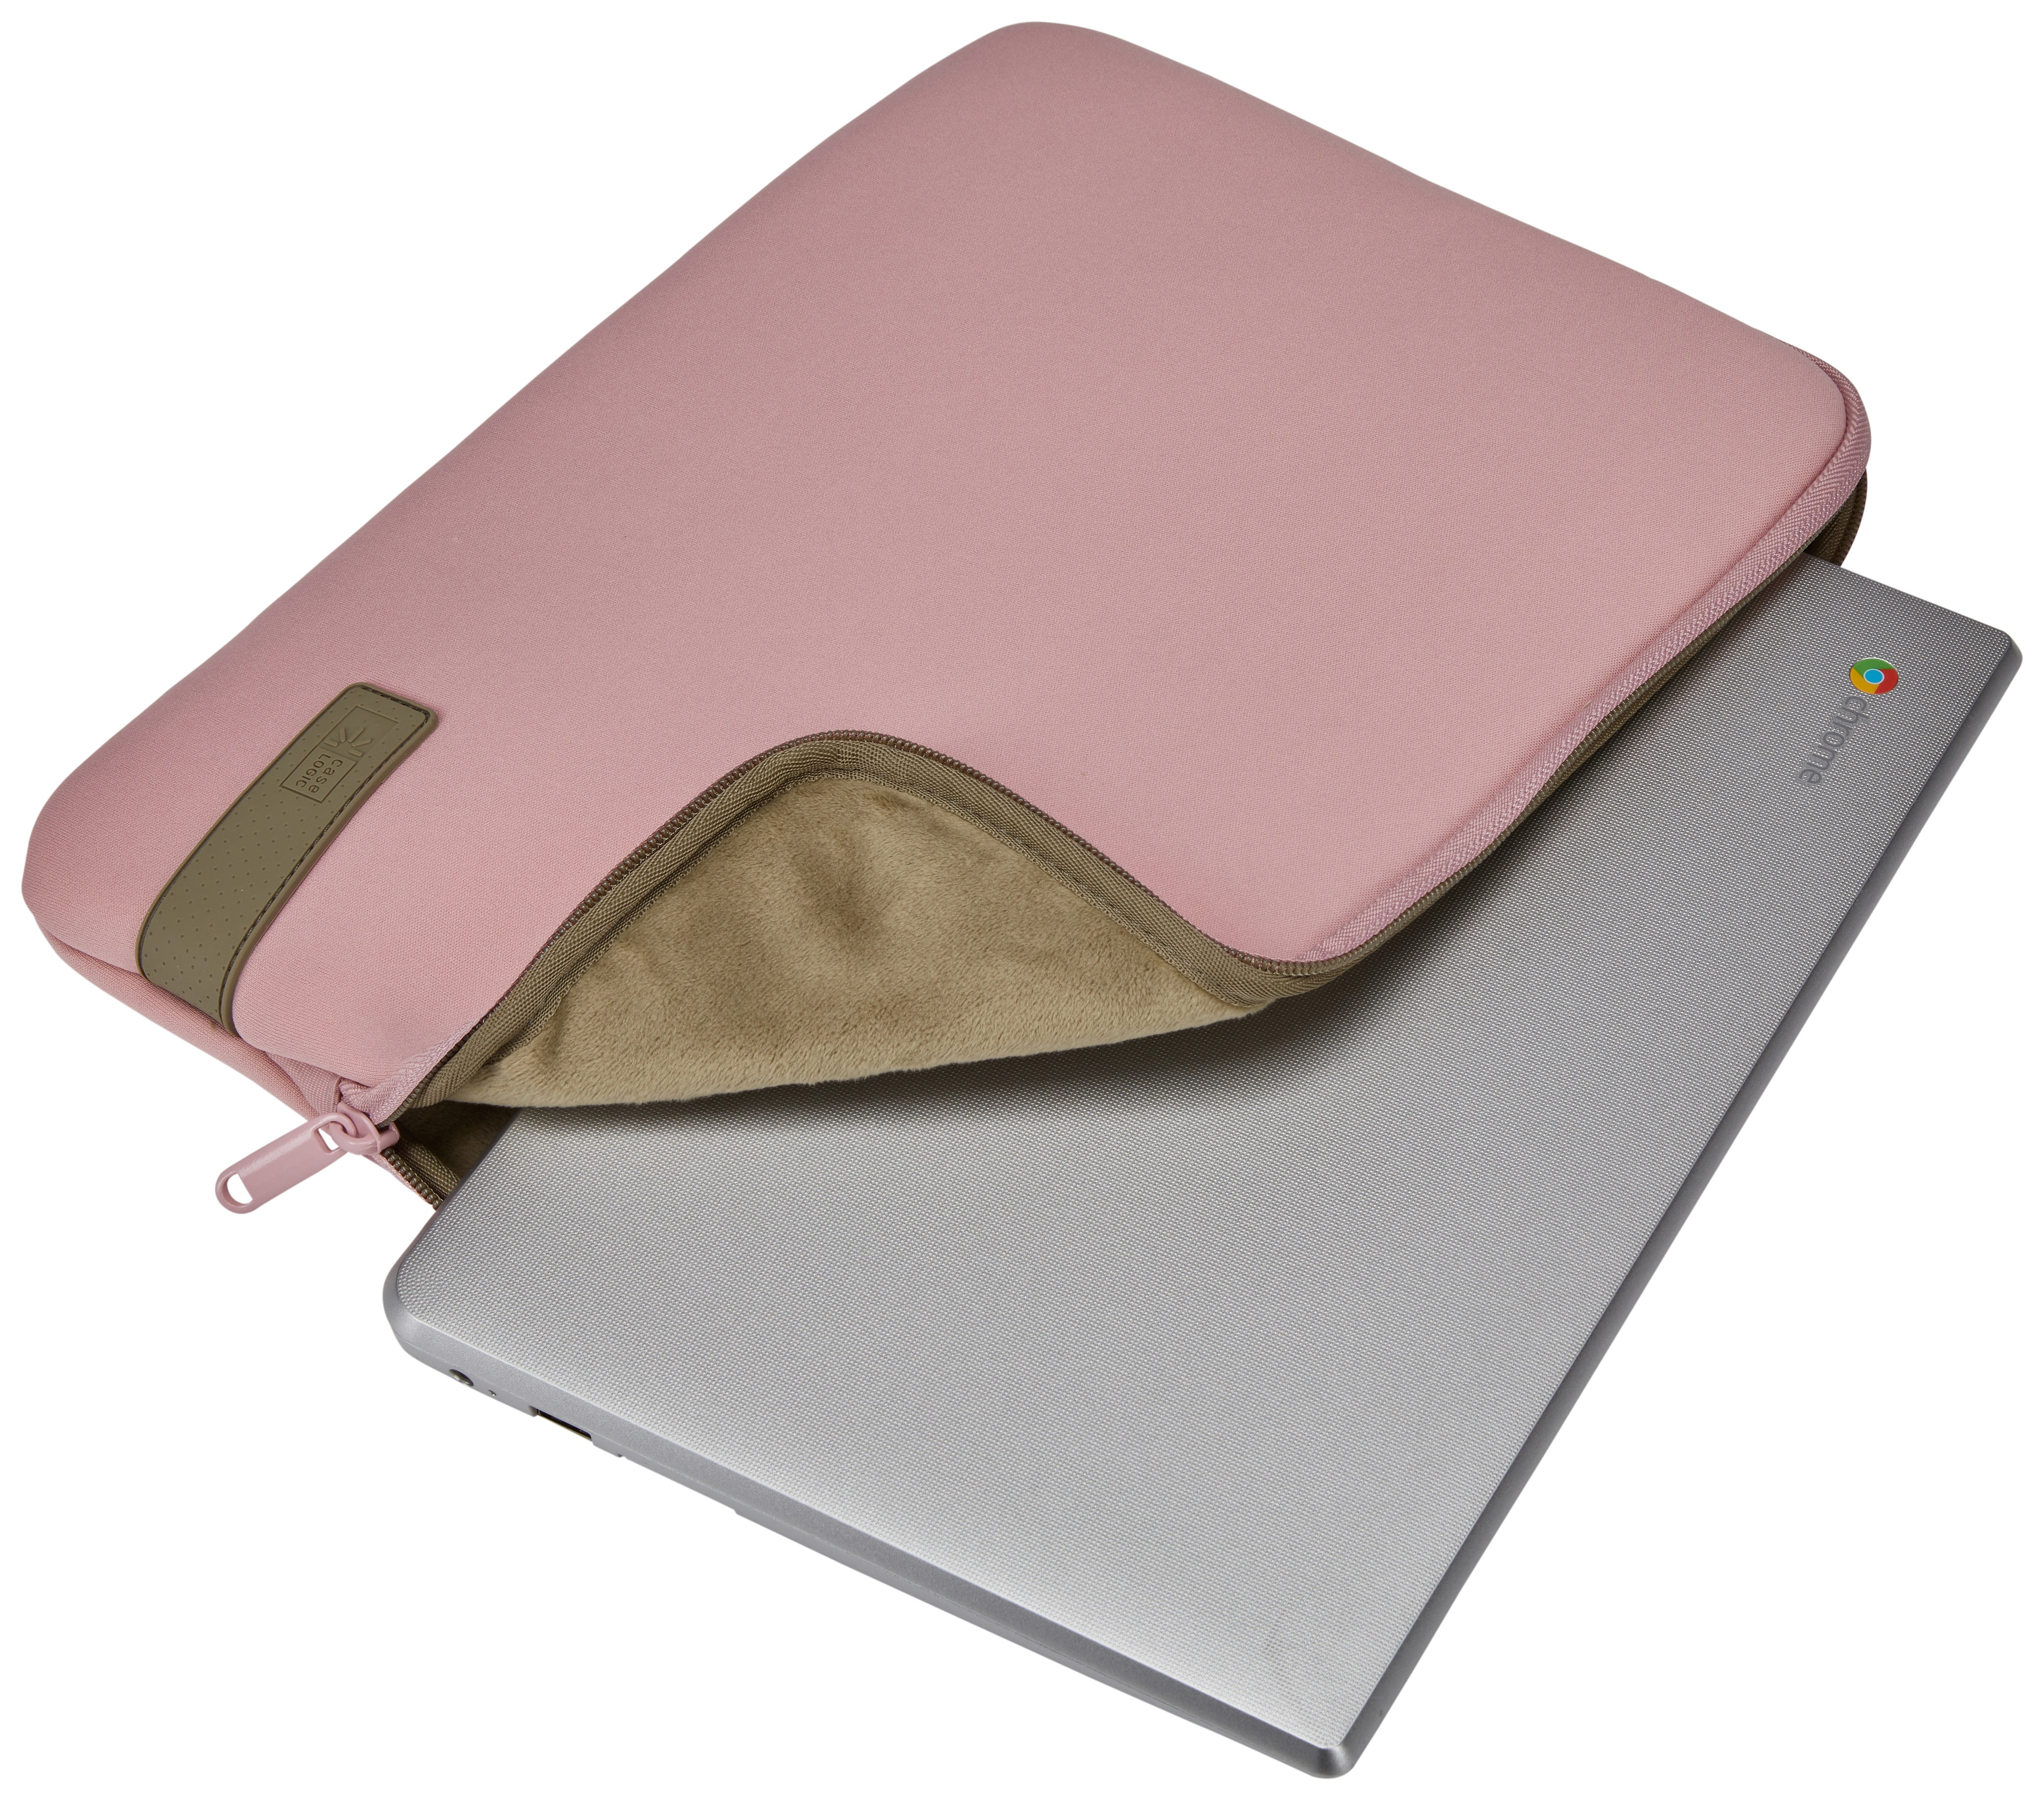 CASE LOGIC Reflect Notebook sleeve Pink/Mermaid Polyester, Sleeve Universal für Zephyr